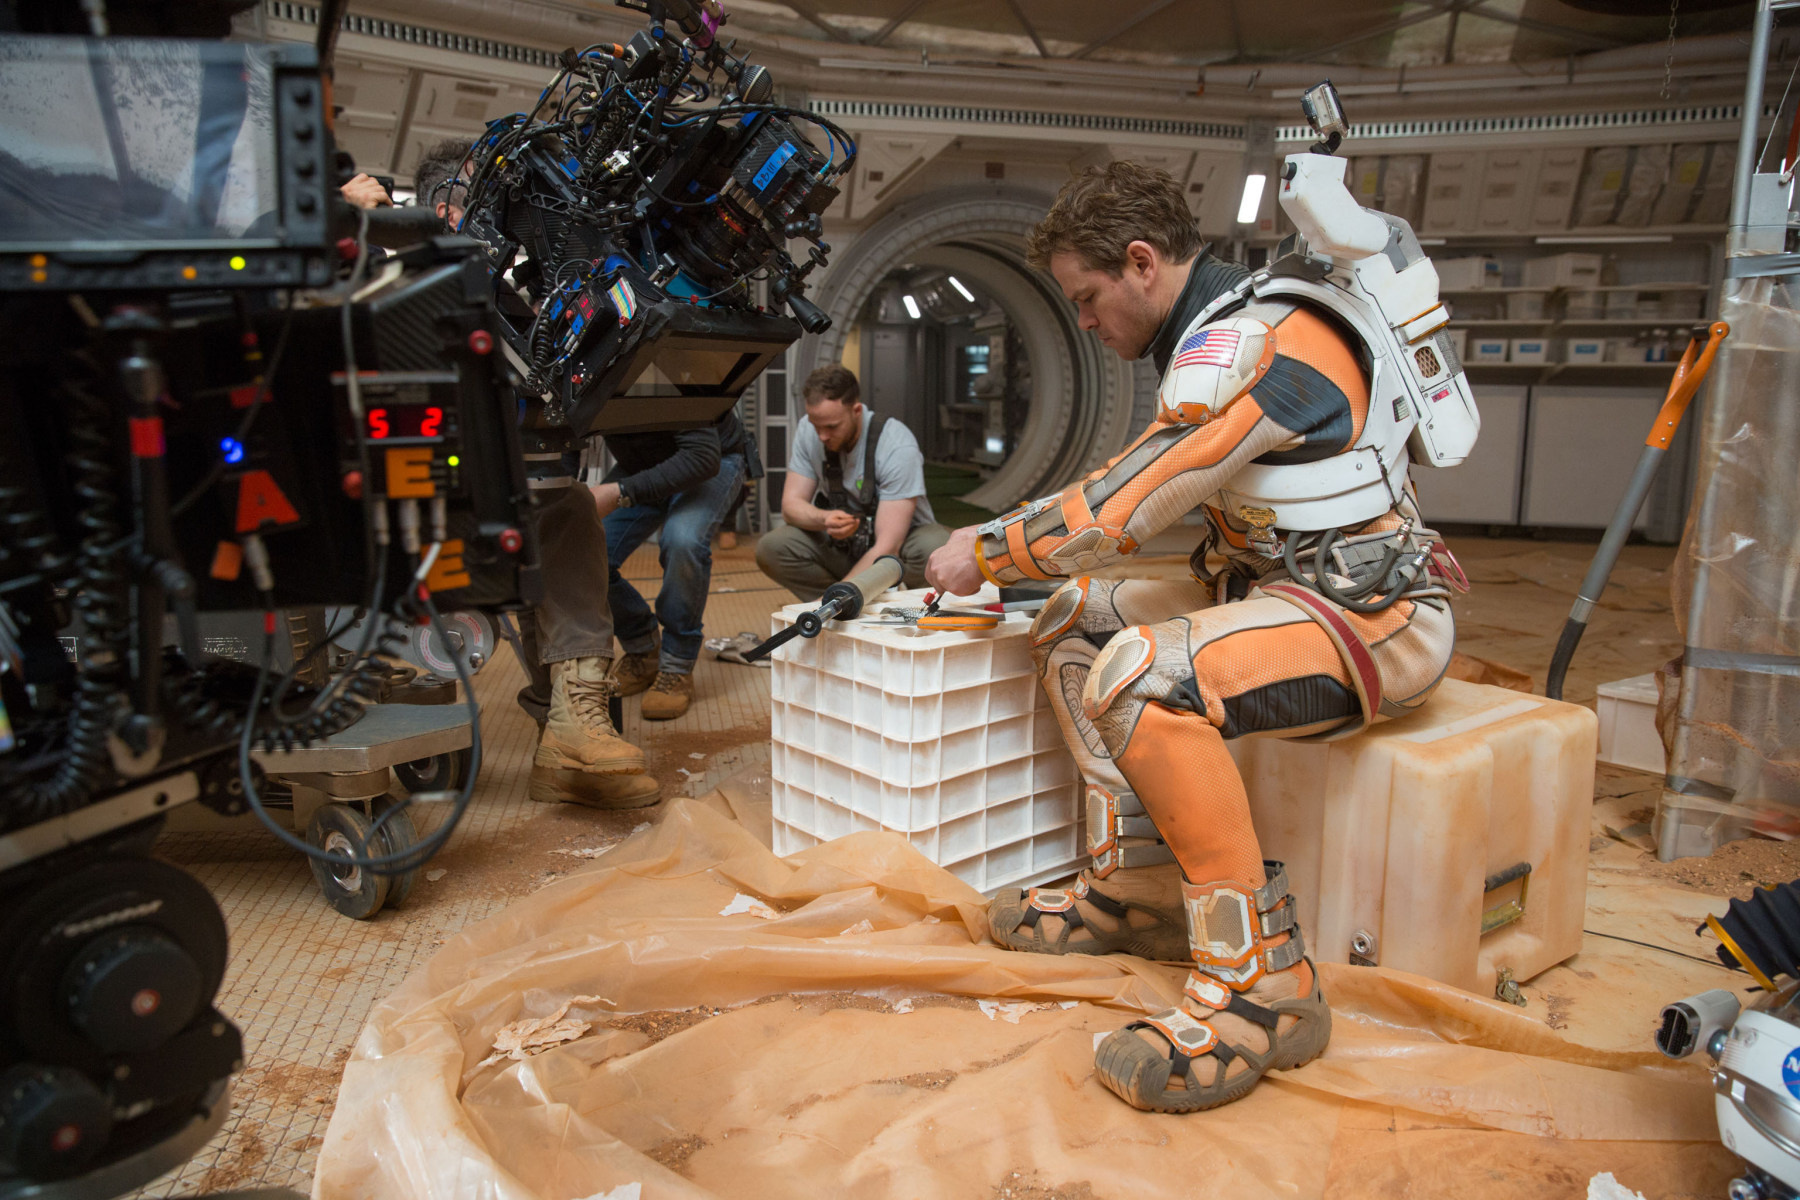 Matt Damon getting handy for a scene in The Martian.